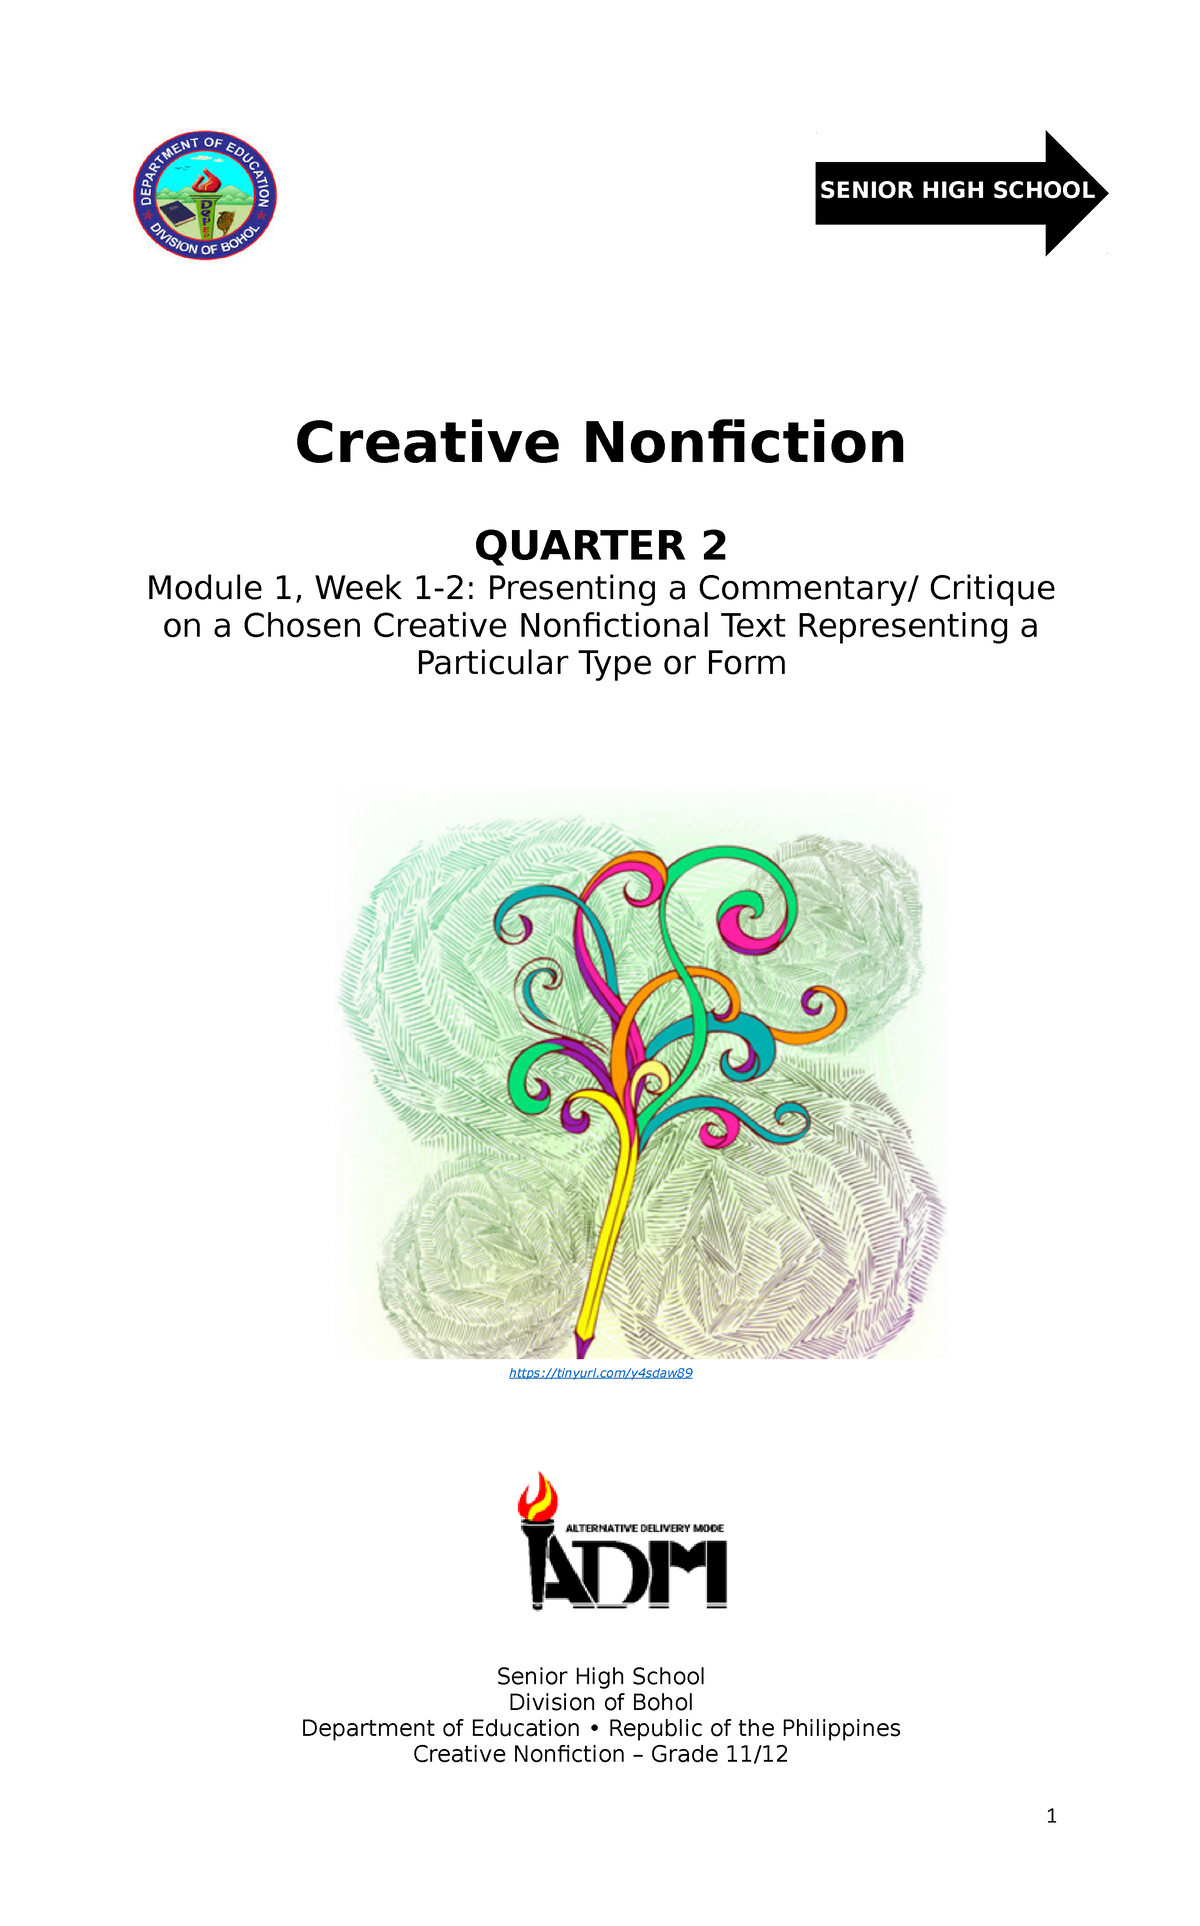 creative writing 2nd quarter module 1